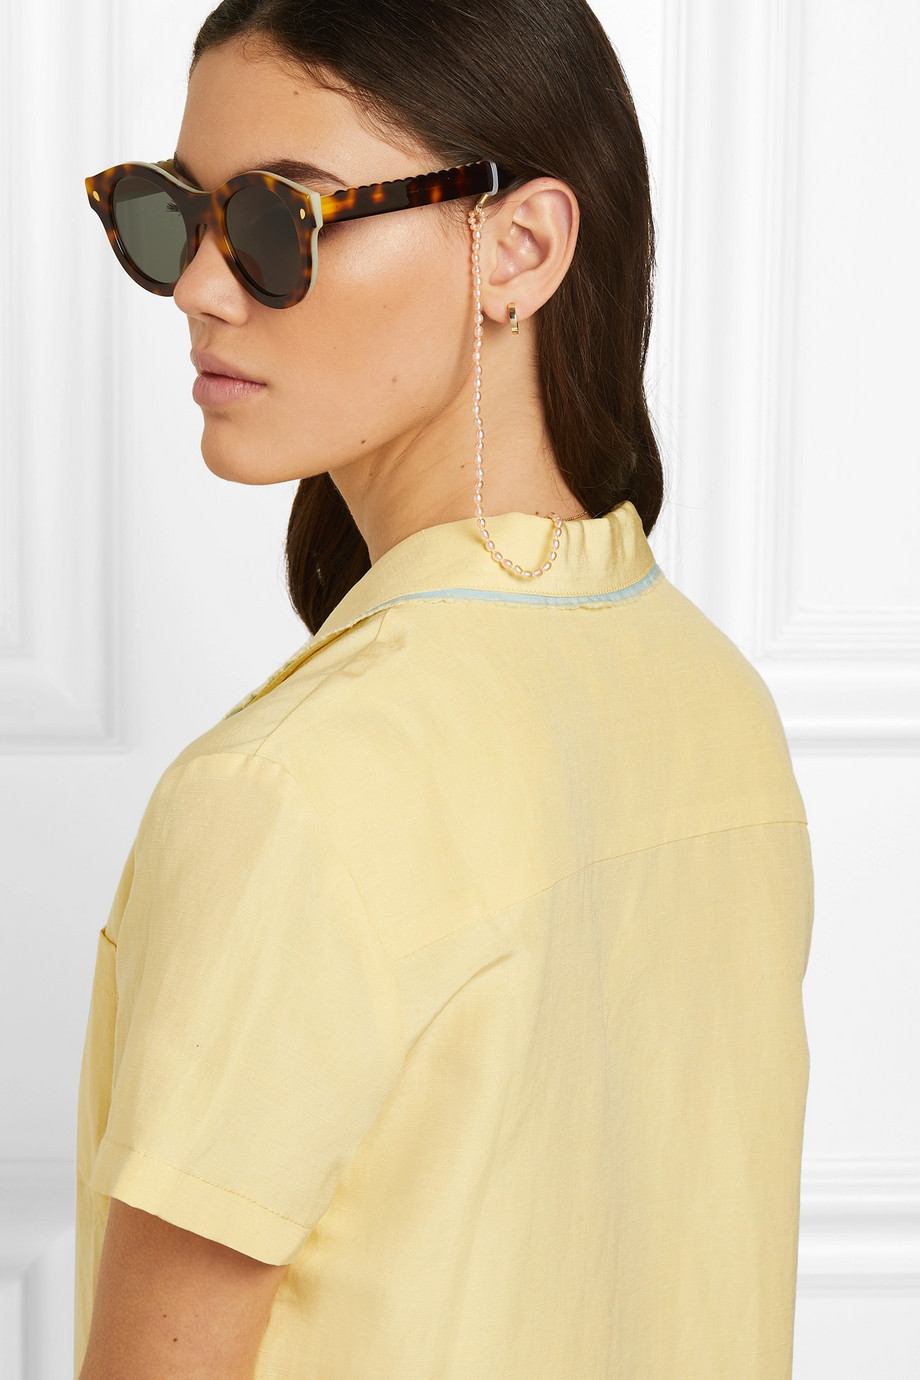 Modeaccessoires Trends Frauen Brillen Hemdbluse gelb kombinieren